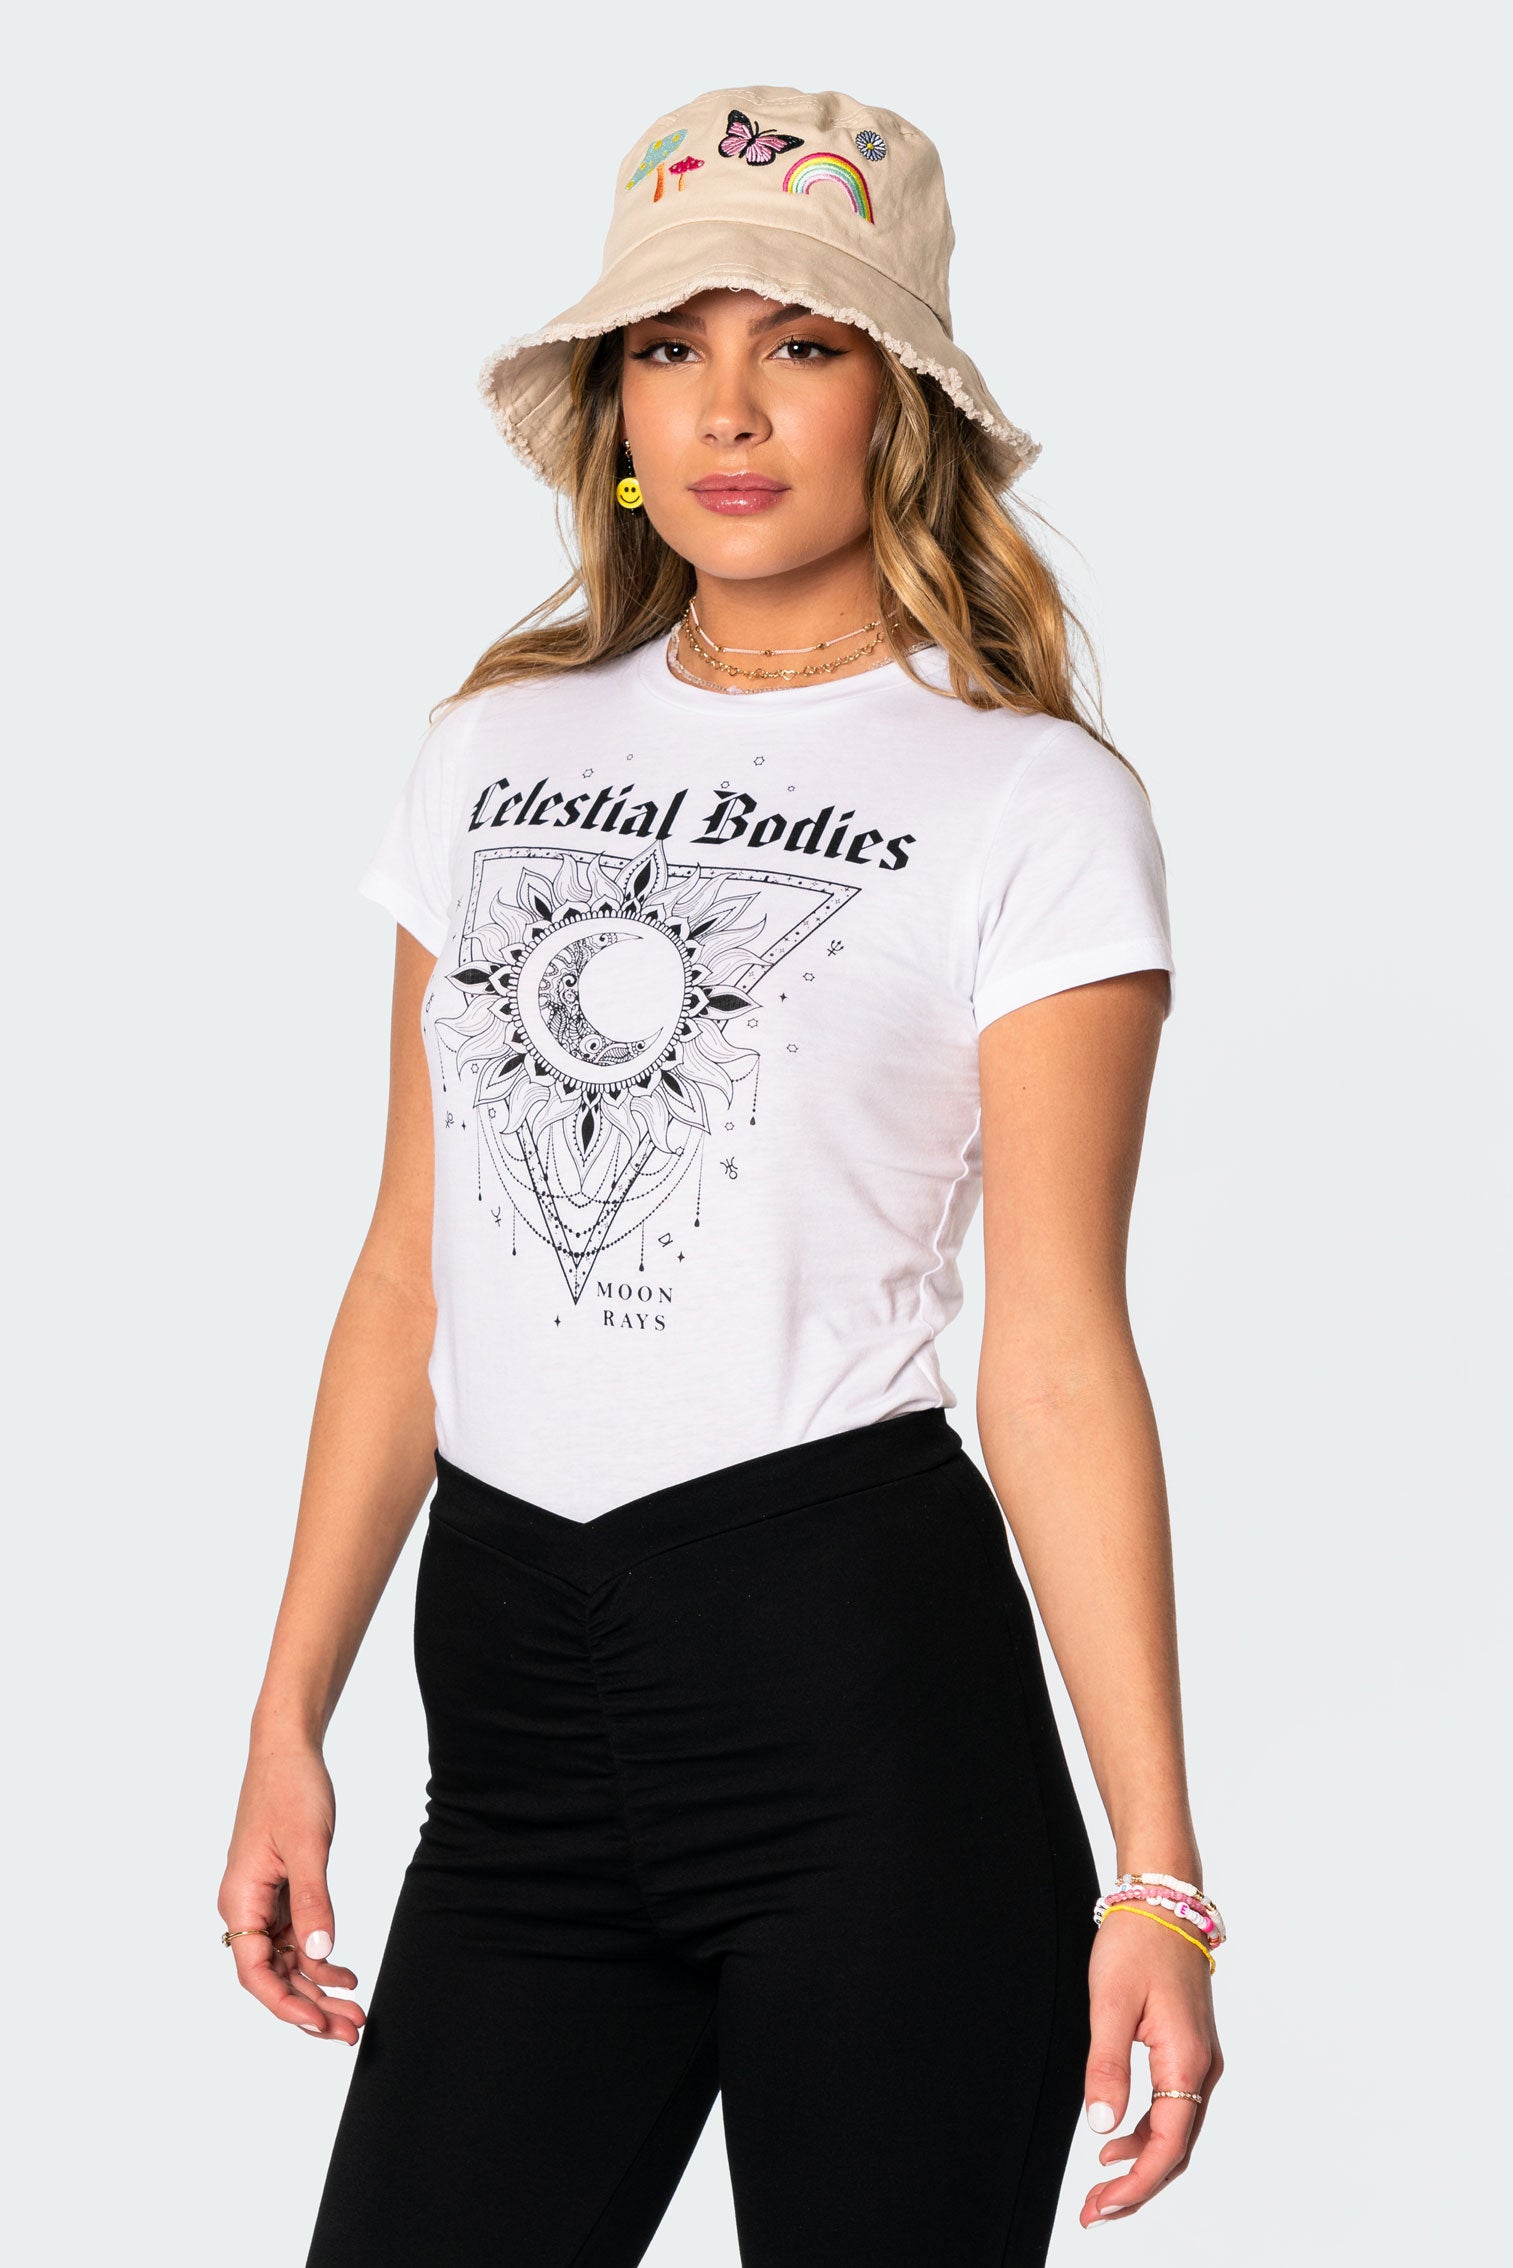 Celestial Bodies T-Shirt